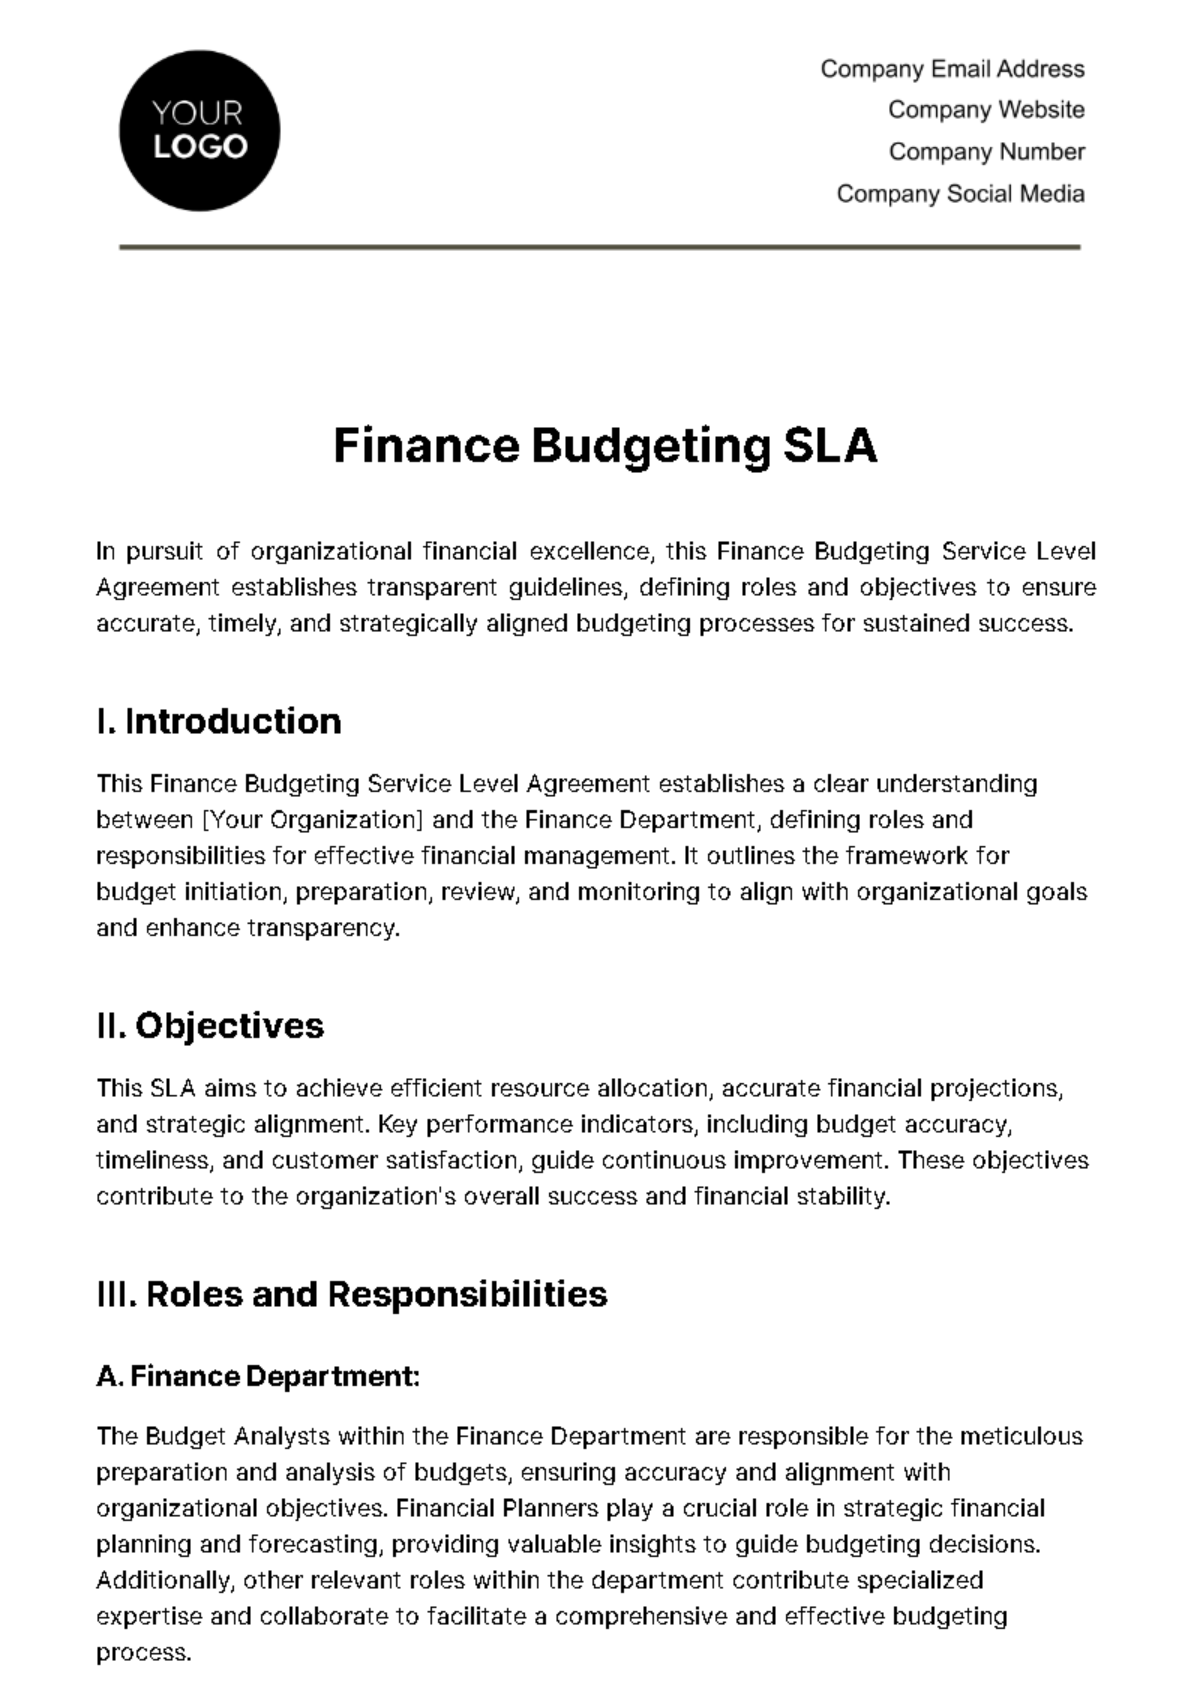 Free Finance Budgeting SLA Template